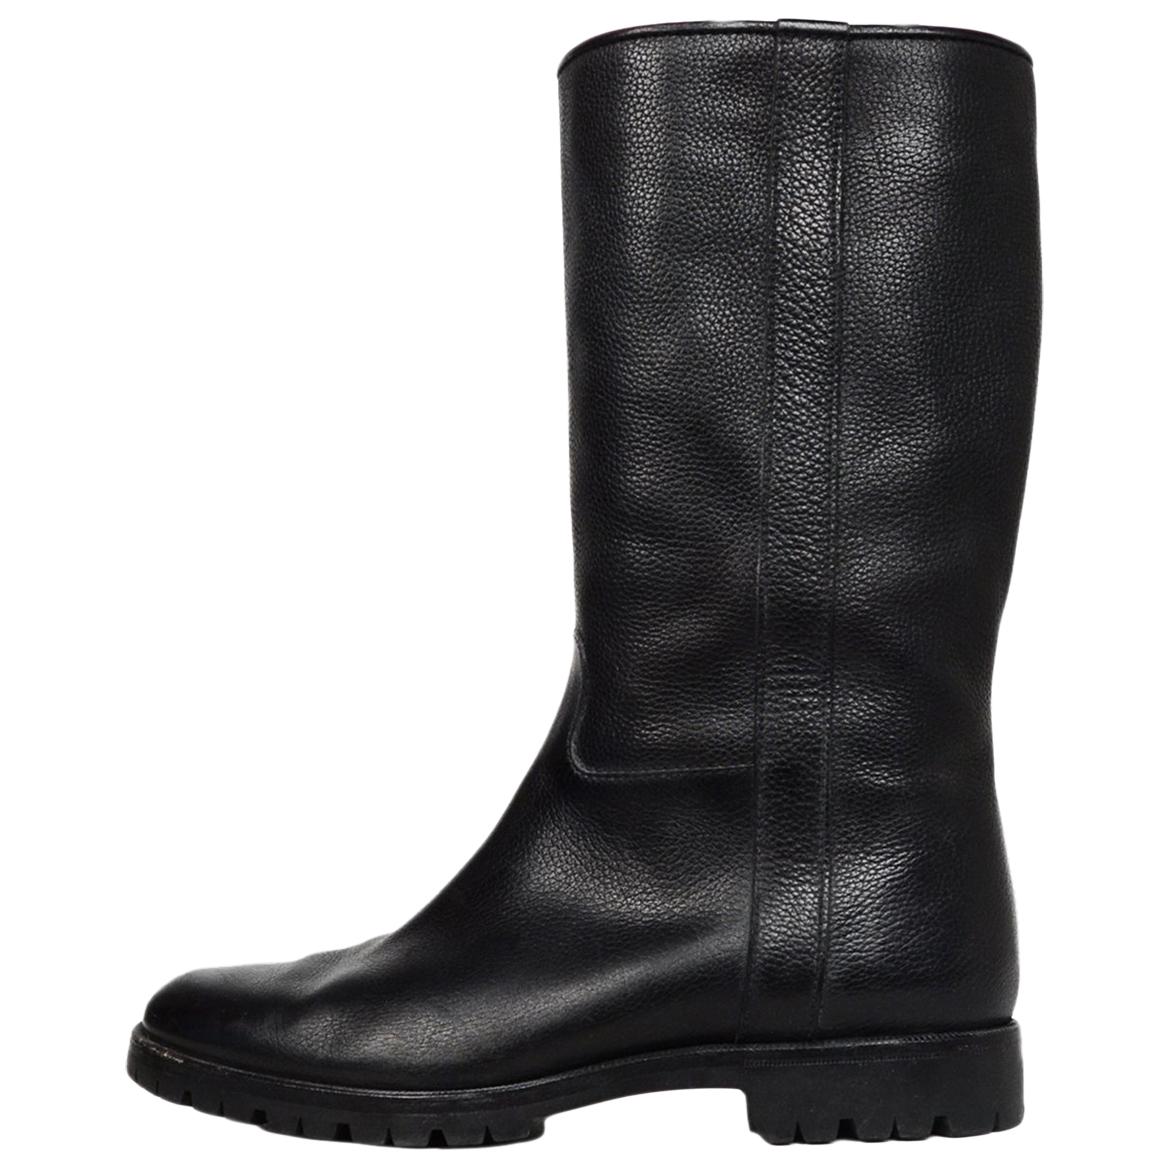 Gravati Black Leather Mid Calf Boots Sz 7.5